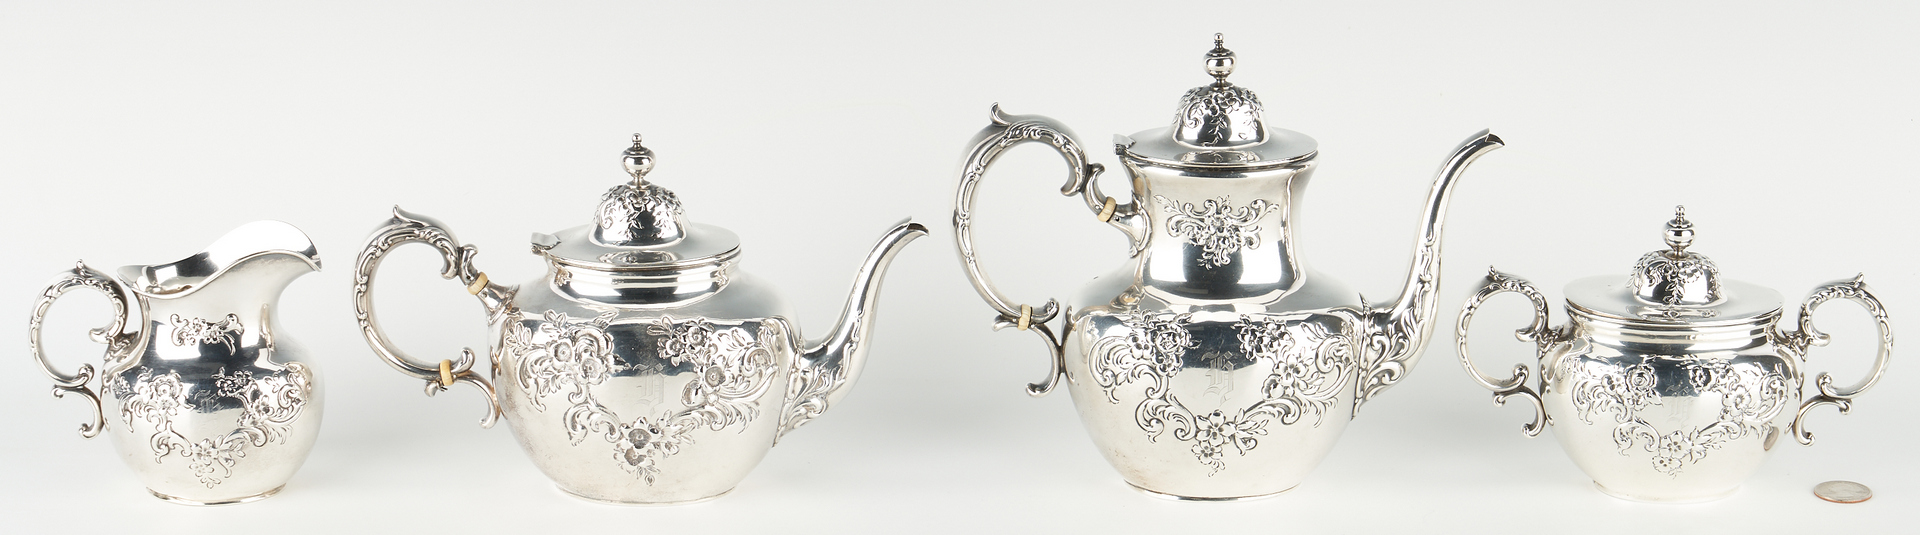 Lot 514: 4 Pcs. Whiting Sterling Silver Tea Set w/ Repousse Floral Design